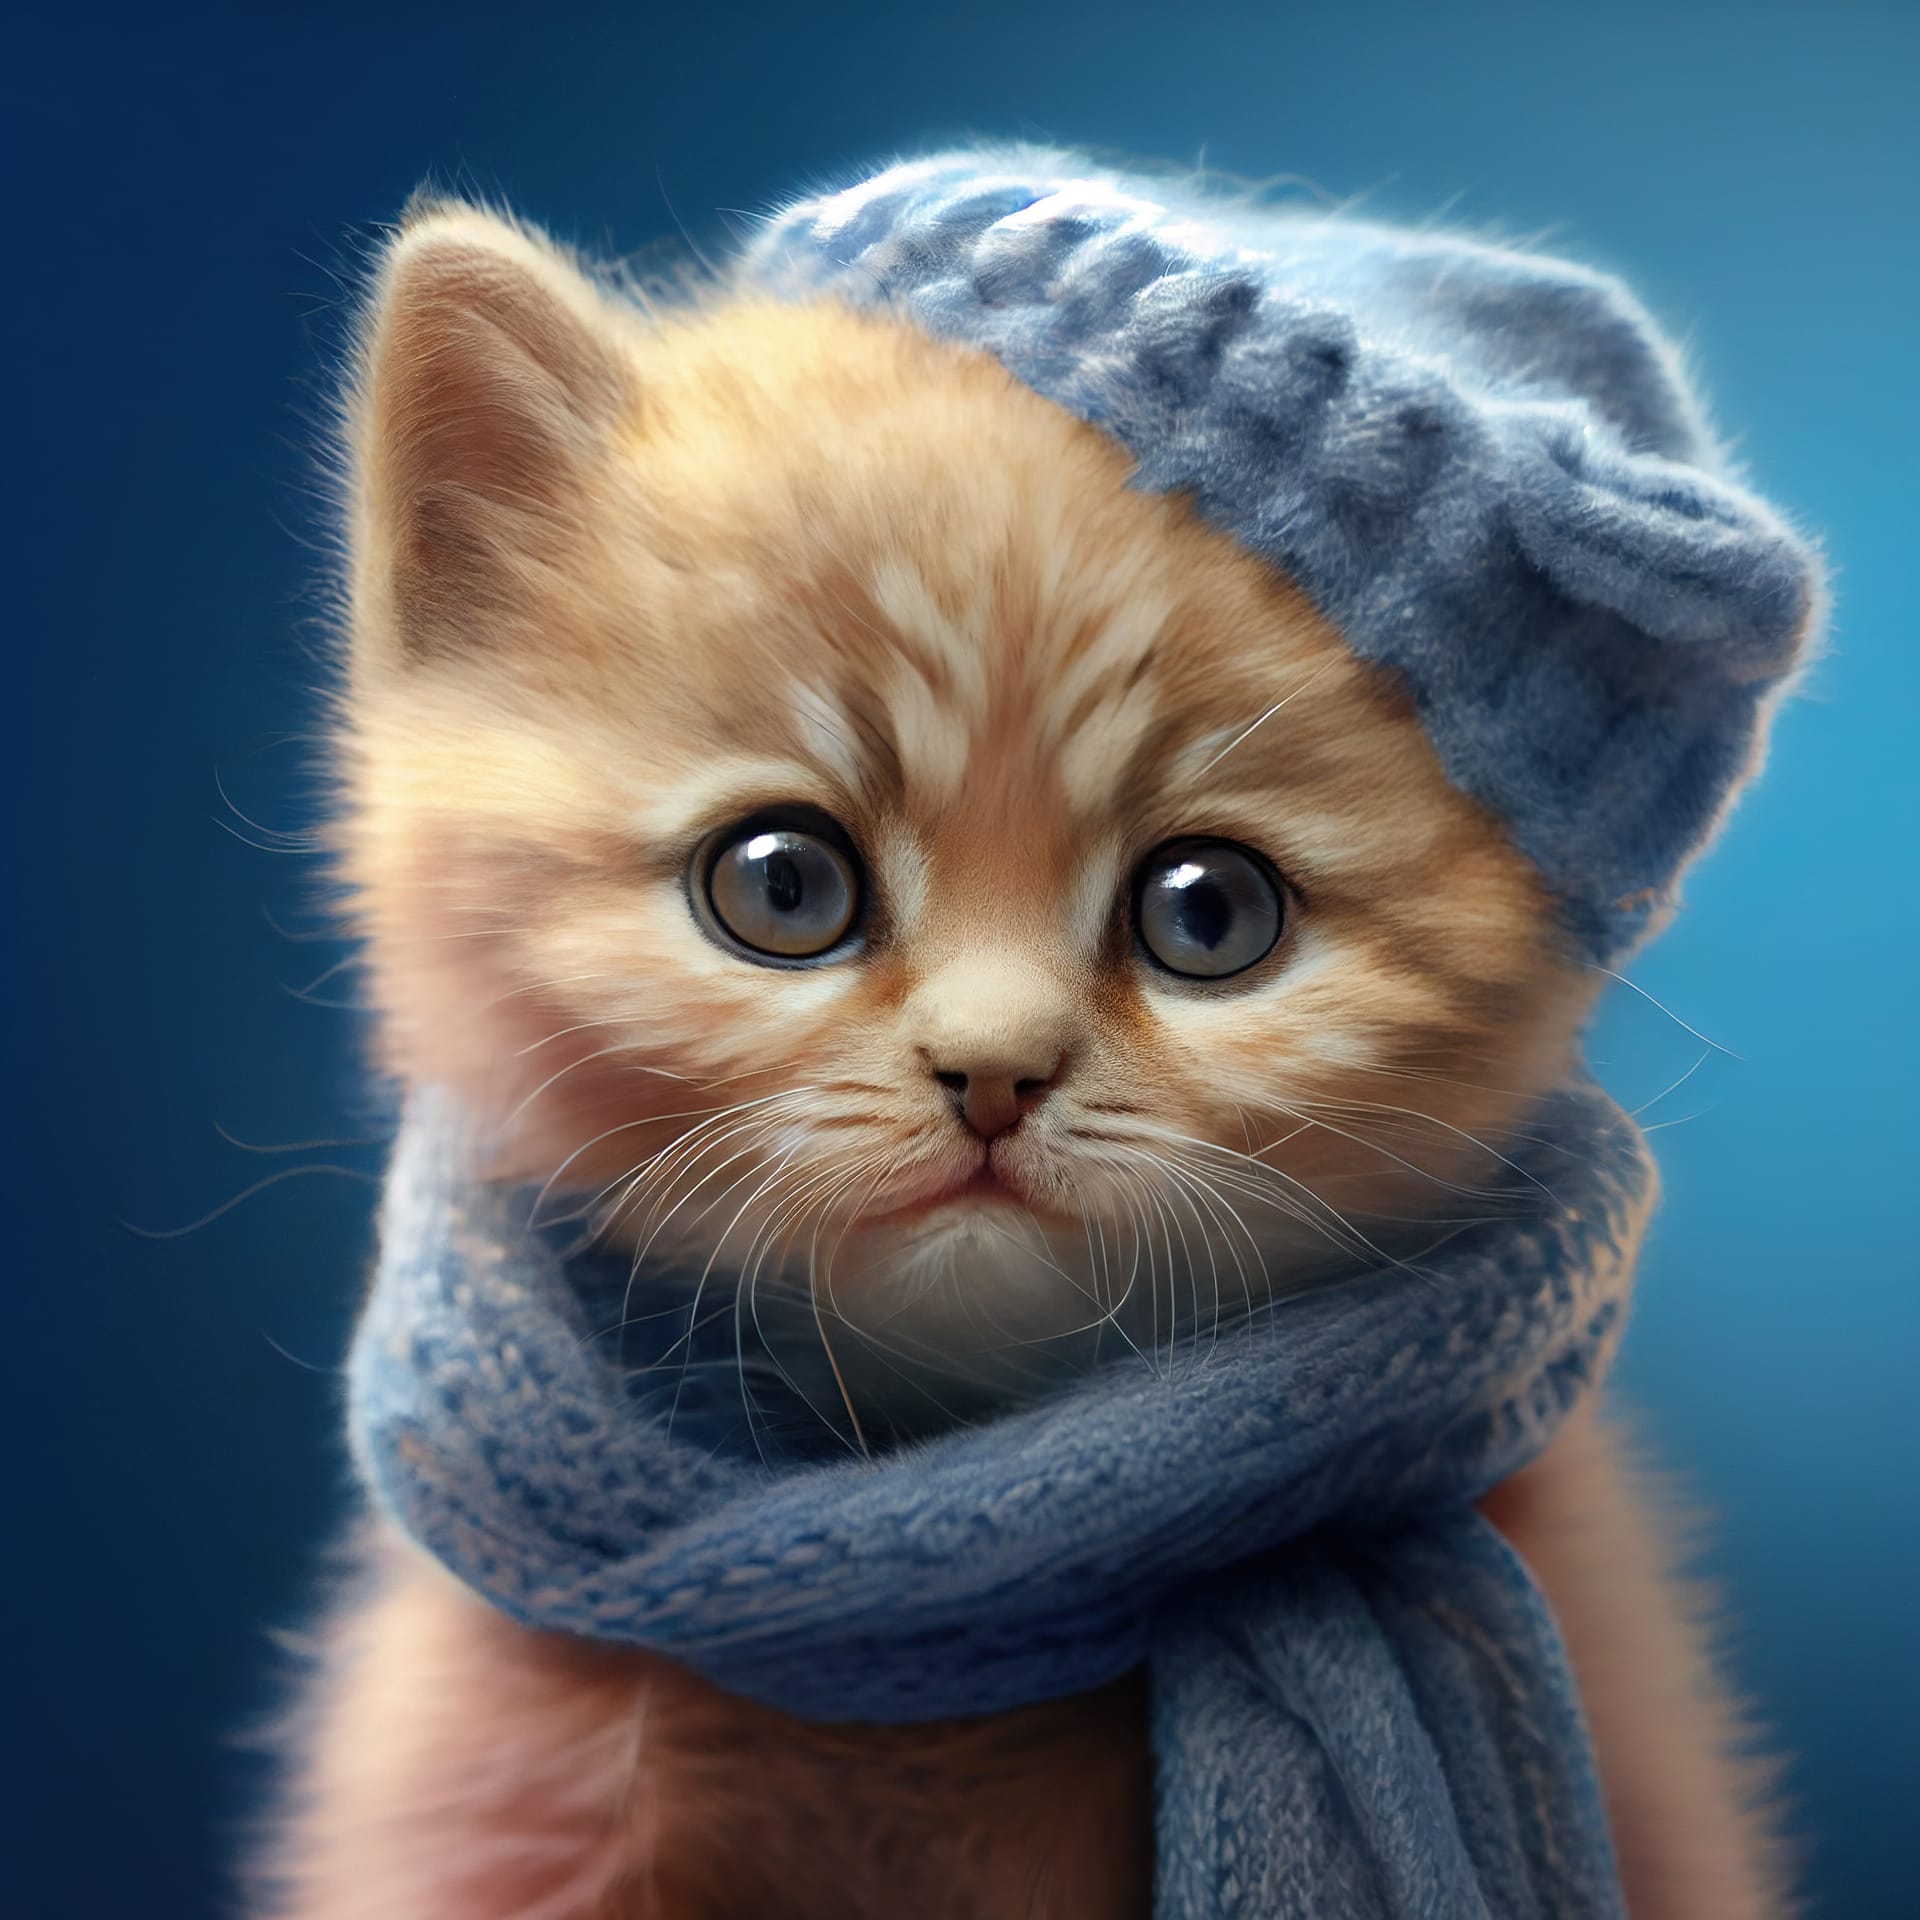 Cute kitten wearing scarf warm hat compelling image